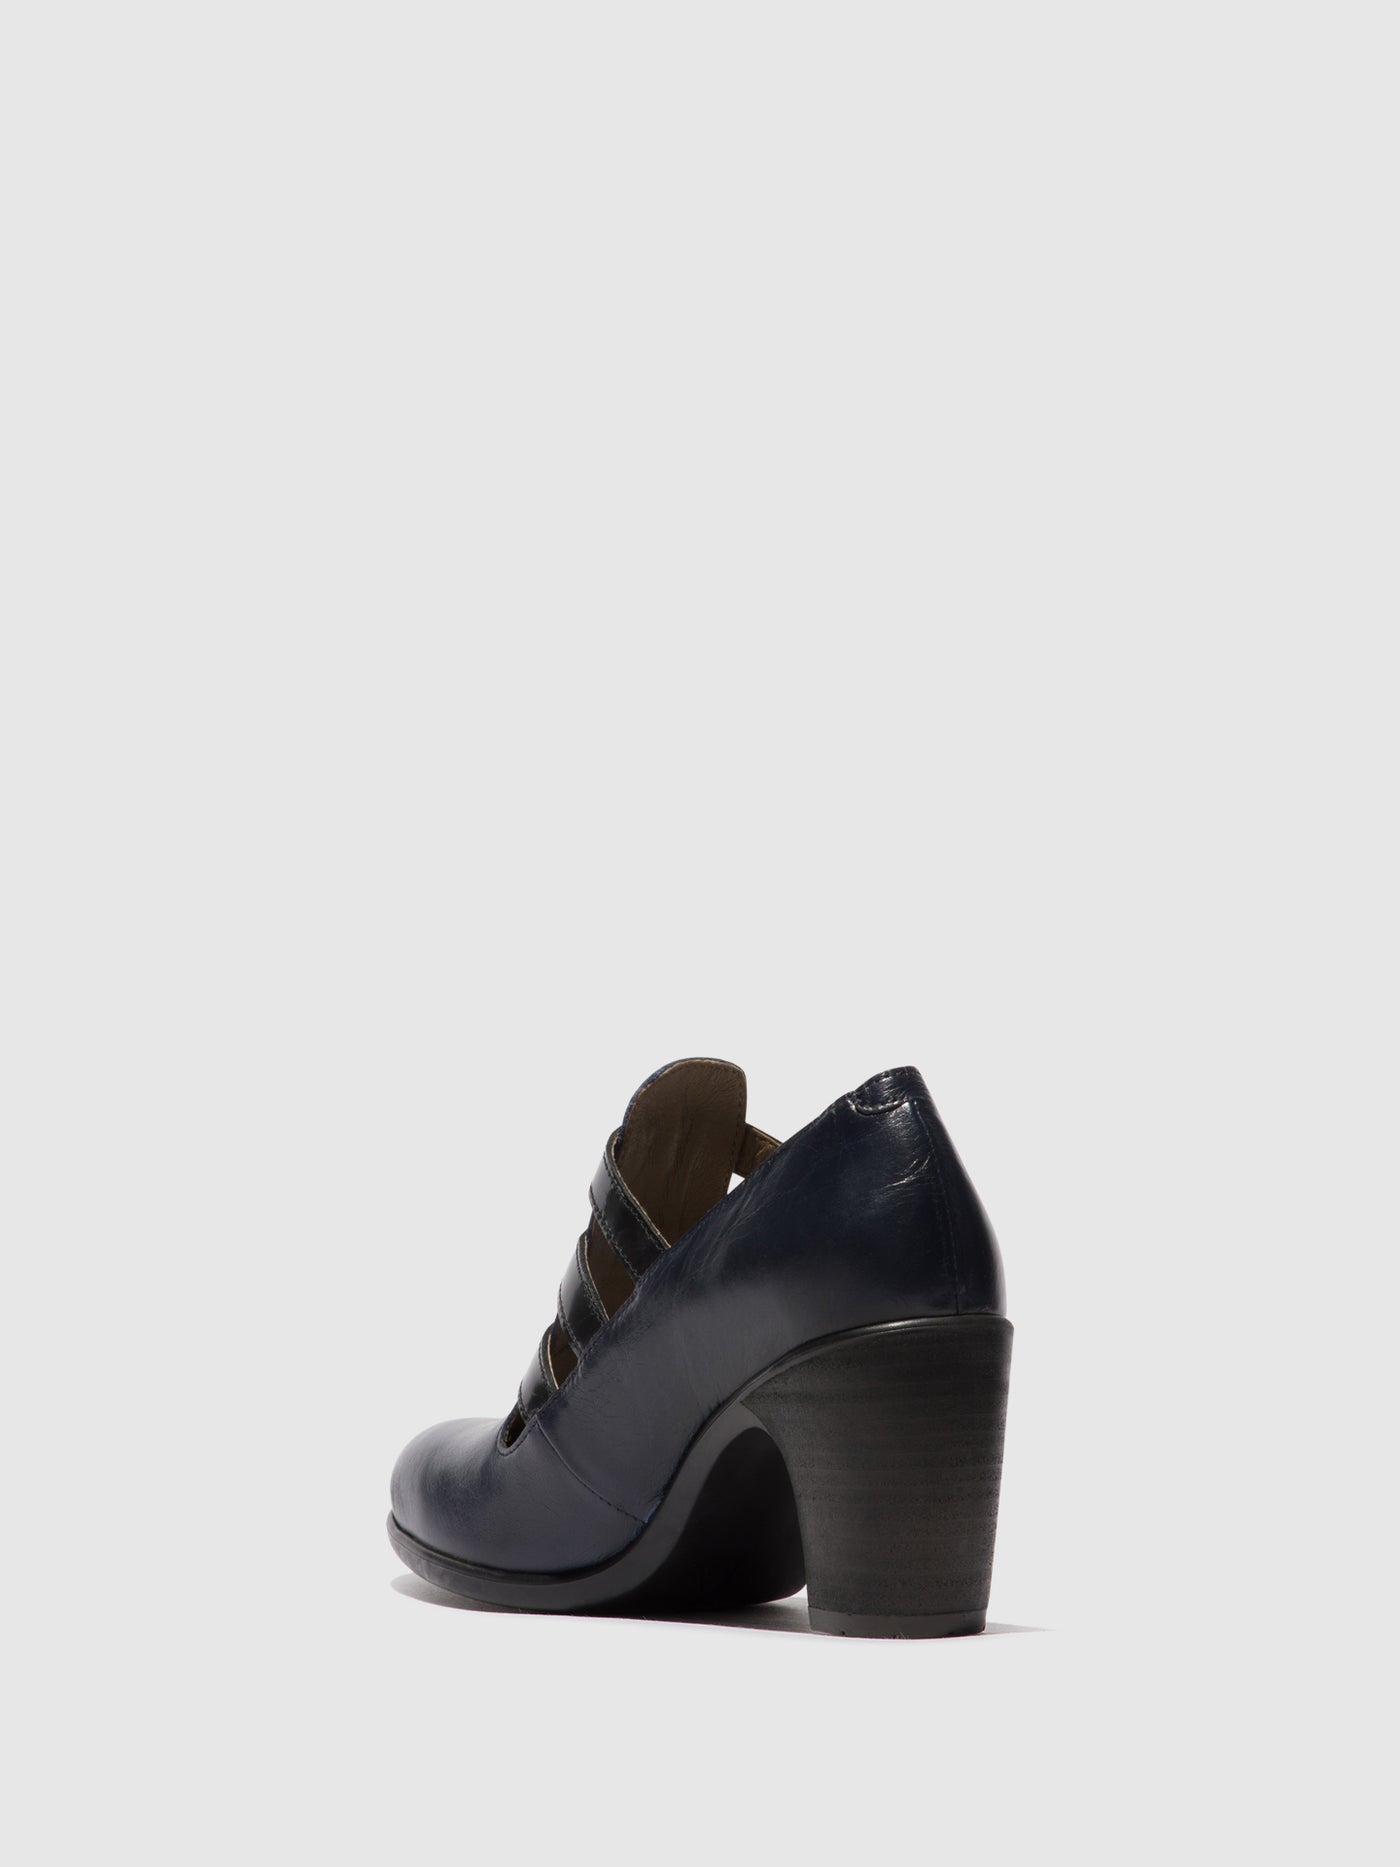 Buckle Shoes KACY011FLY NAVY/BLACK